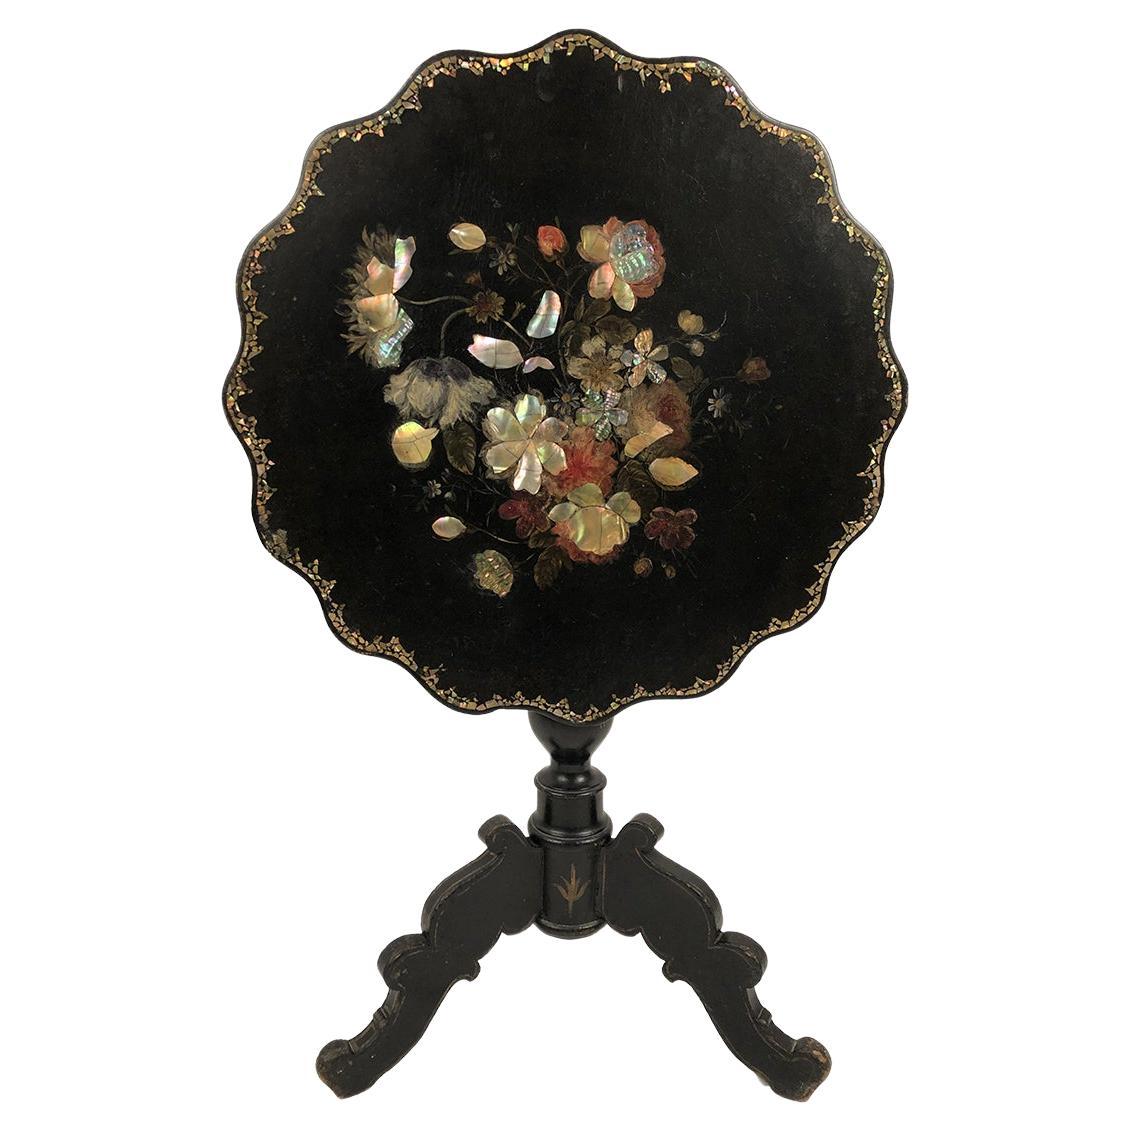 Guéridon basculant Napoléon III en bois noirci burgauté à décor de fleurs